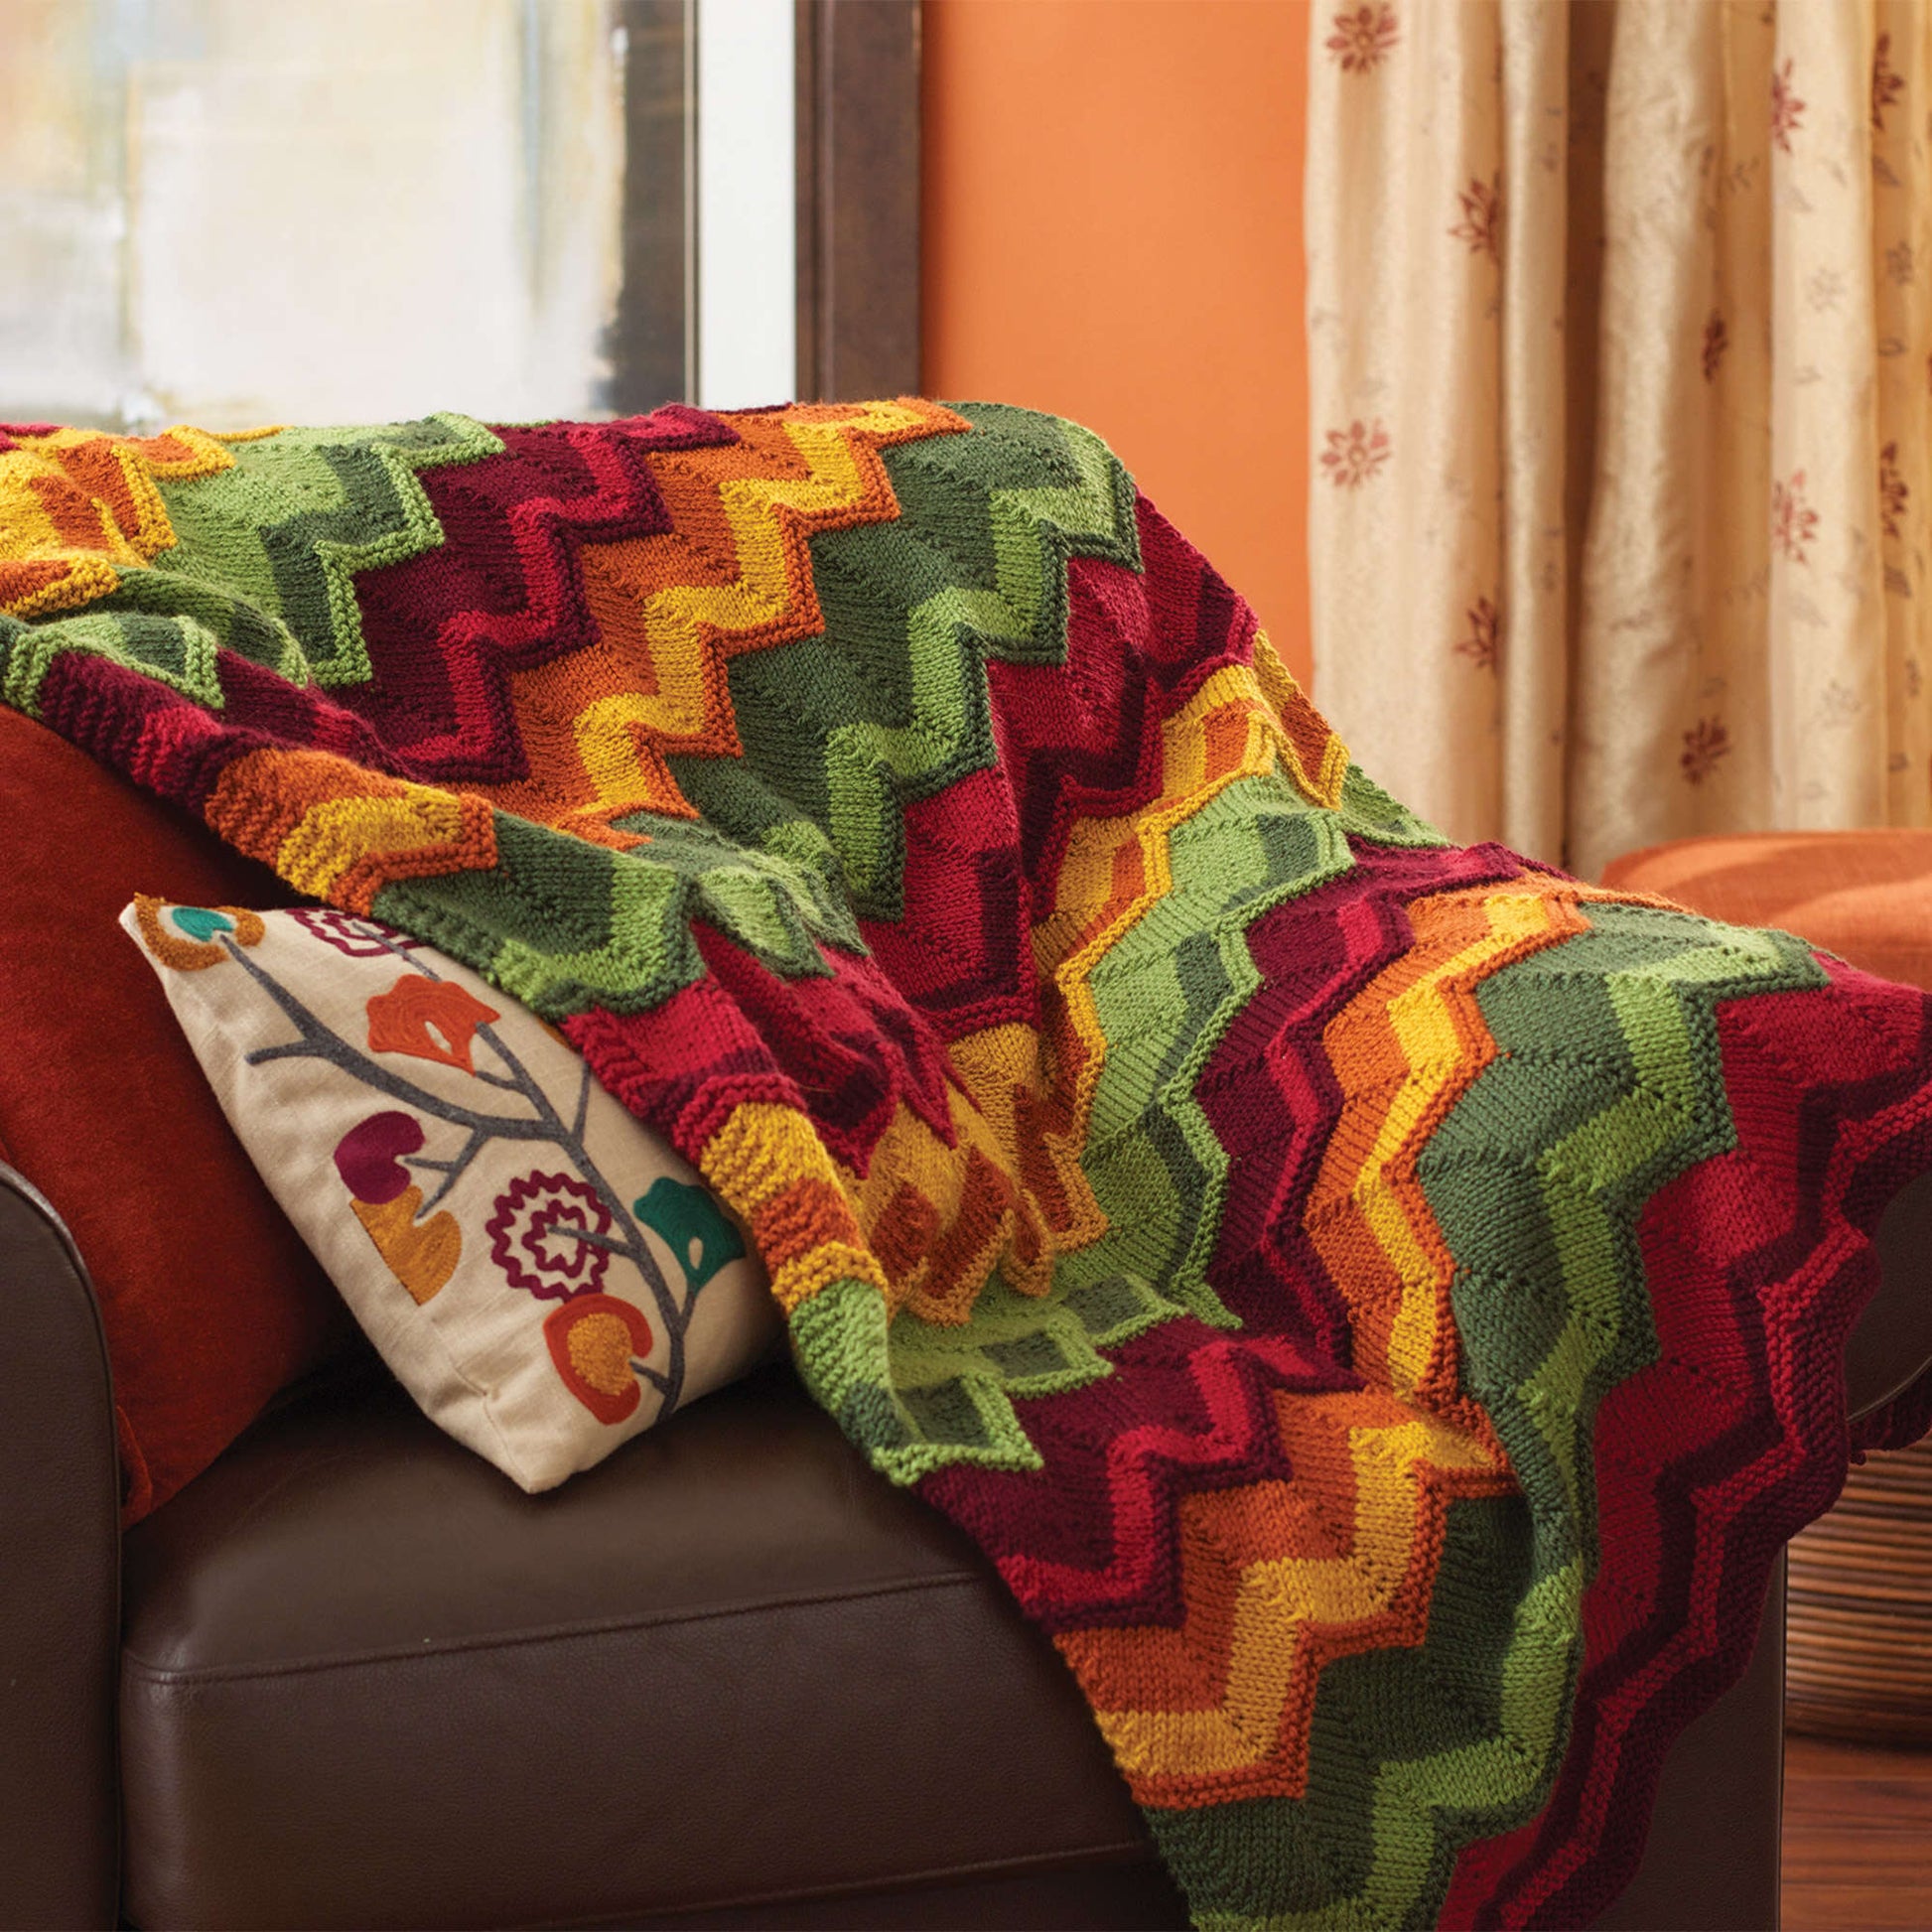 Free Patons Spicy Chevron Knit Blanket Pattern